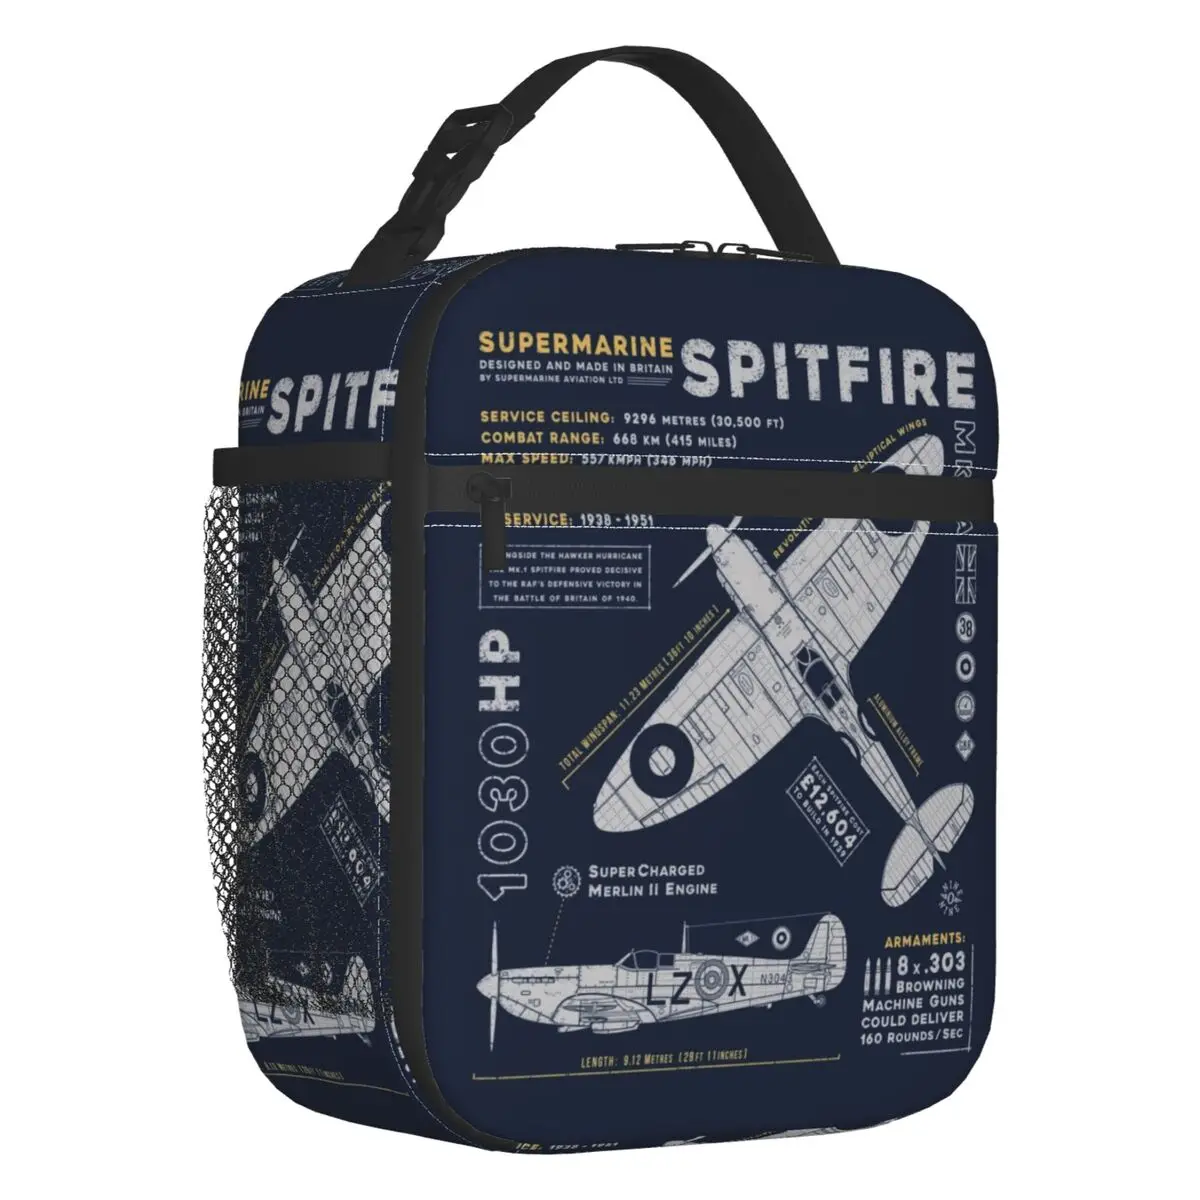 

Supermarine Spitfire Insulated Lunch Bag Fighter Pilot Aircraft Airplane Plane Cooler Thermal Bento Box Kids School Children